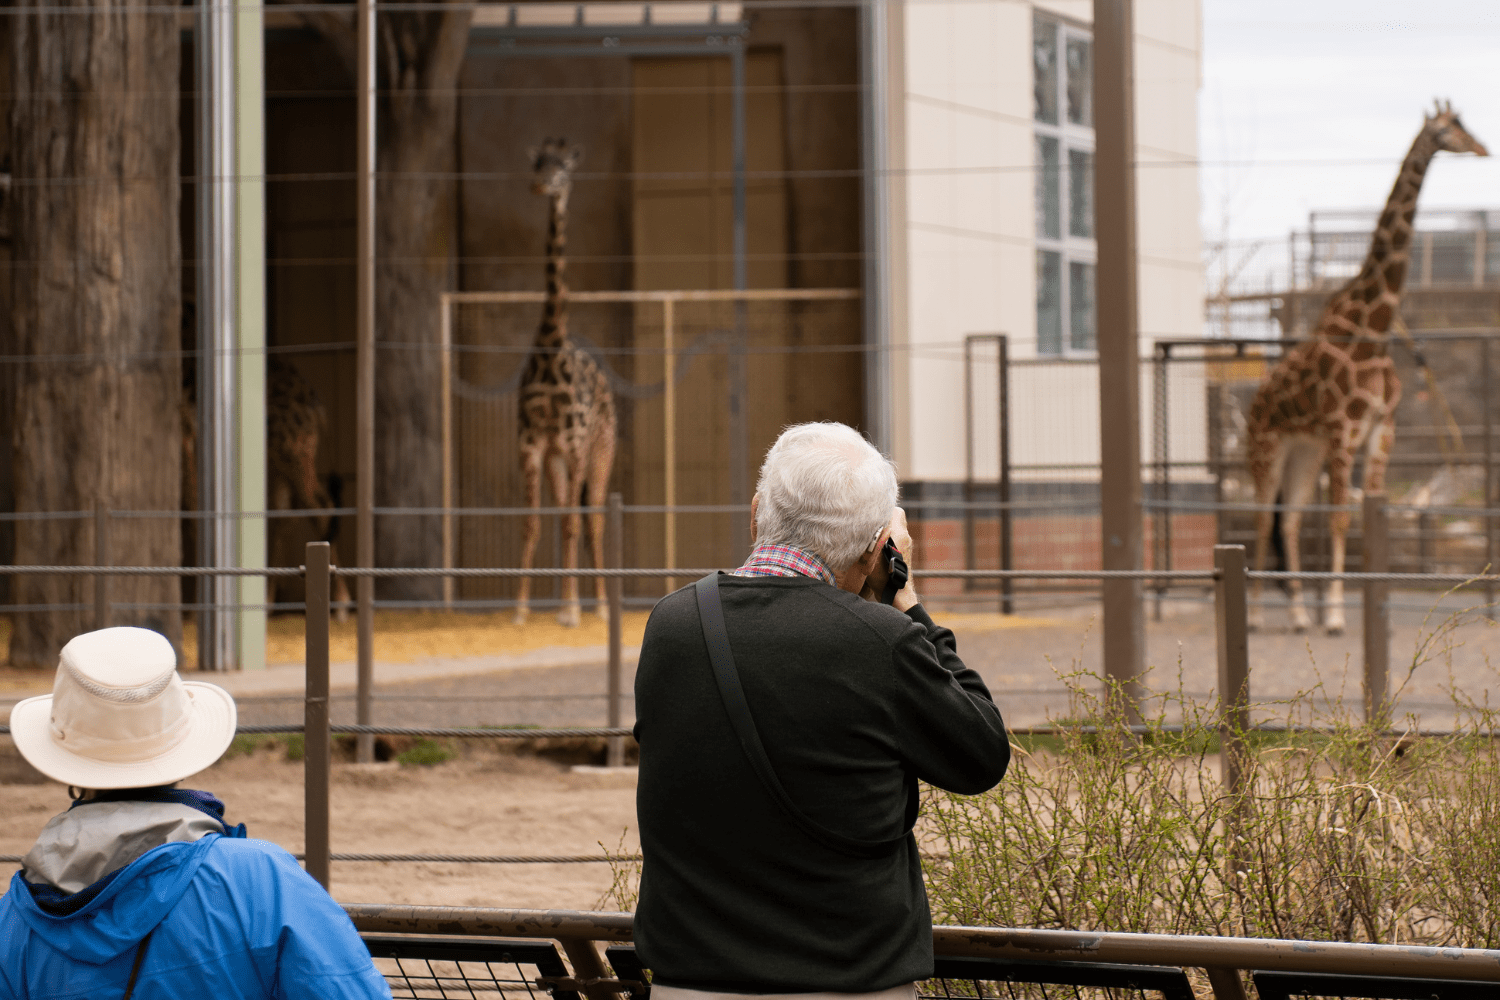 Man taking photo of giraffe at the zoo